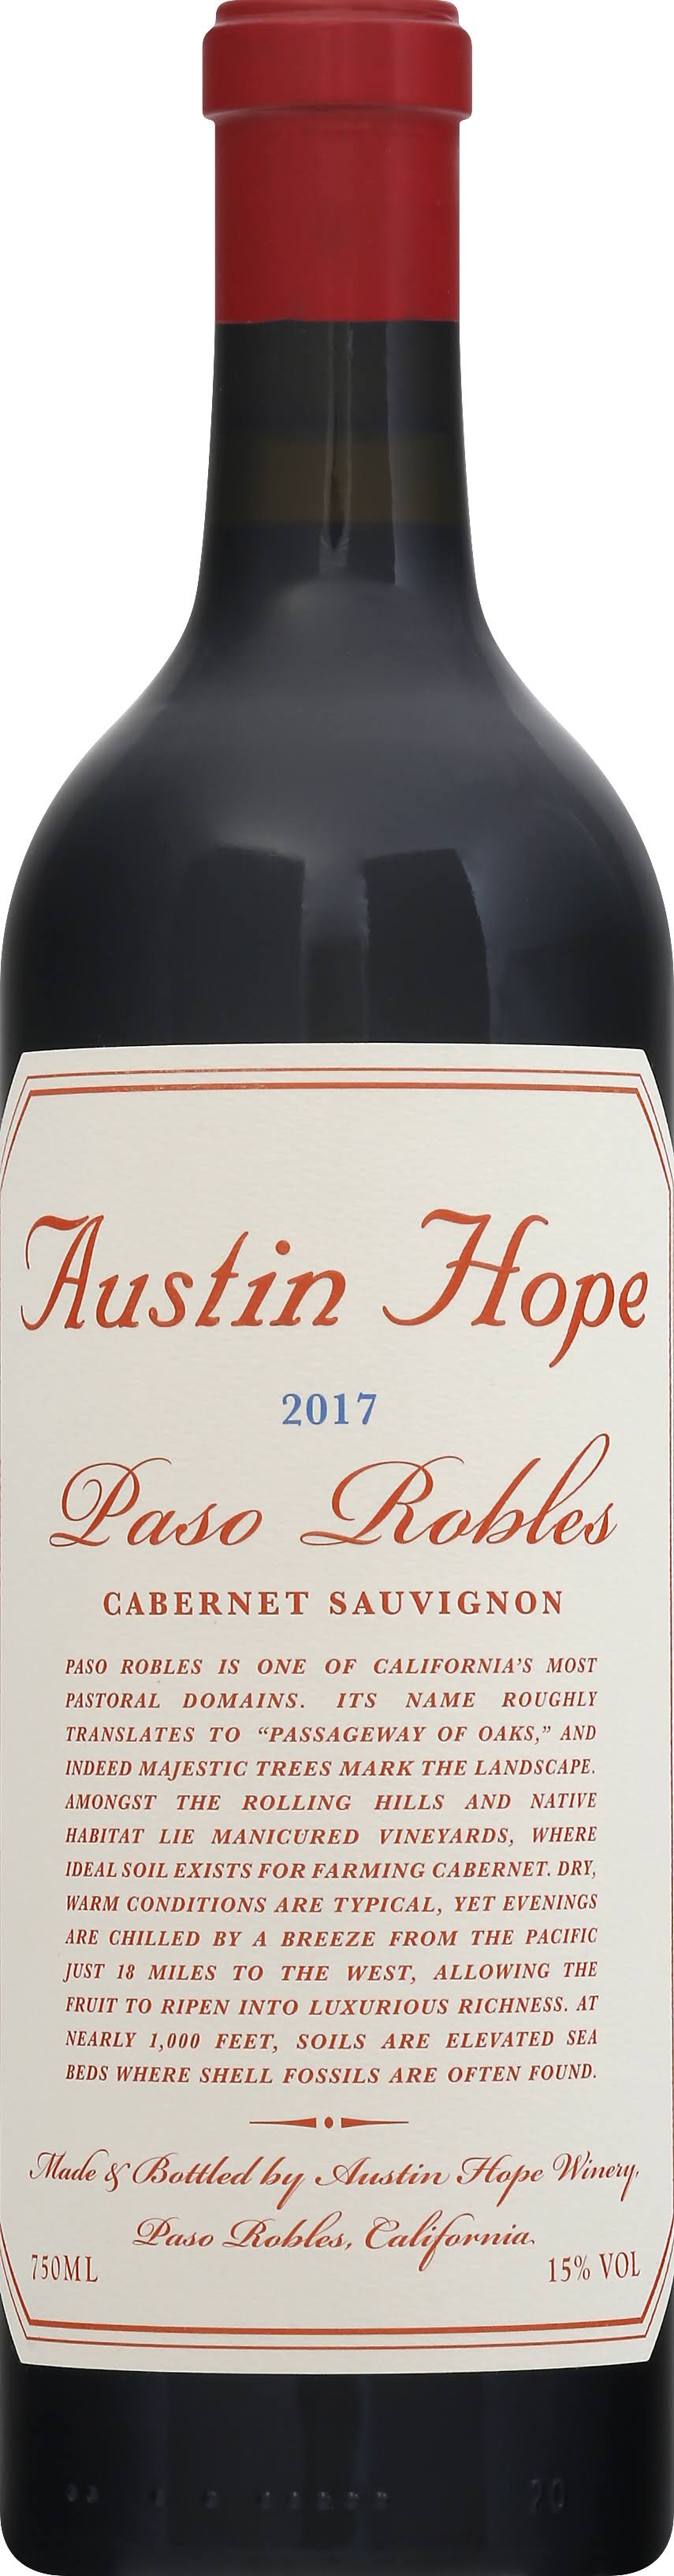 Austin Hope Cabernet Sauvignon, Paso Robles, 2017 - 750 ml